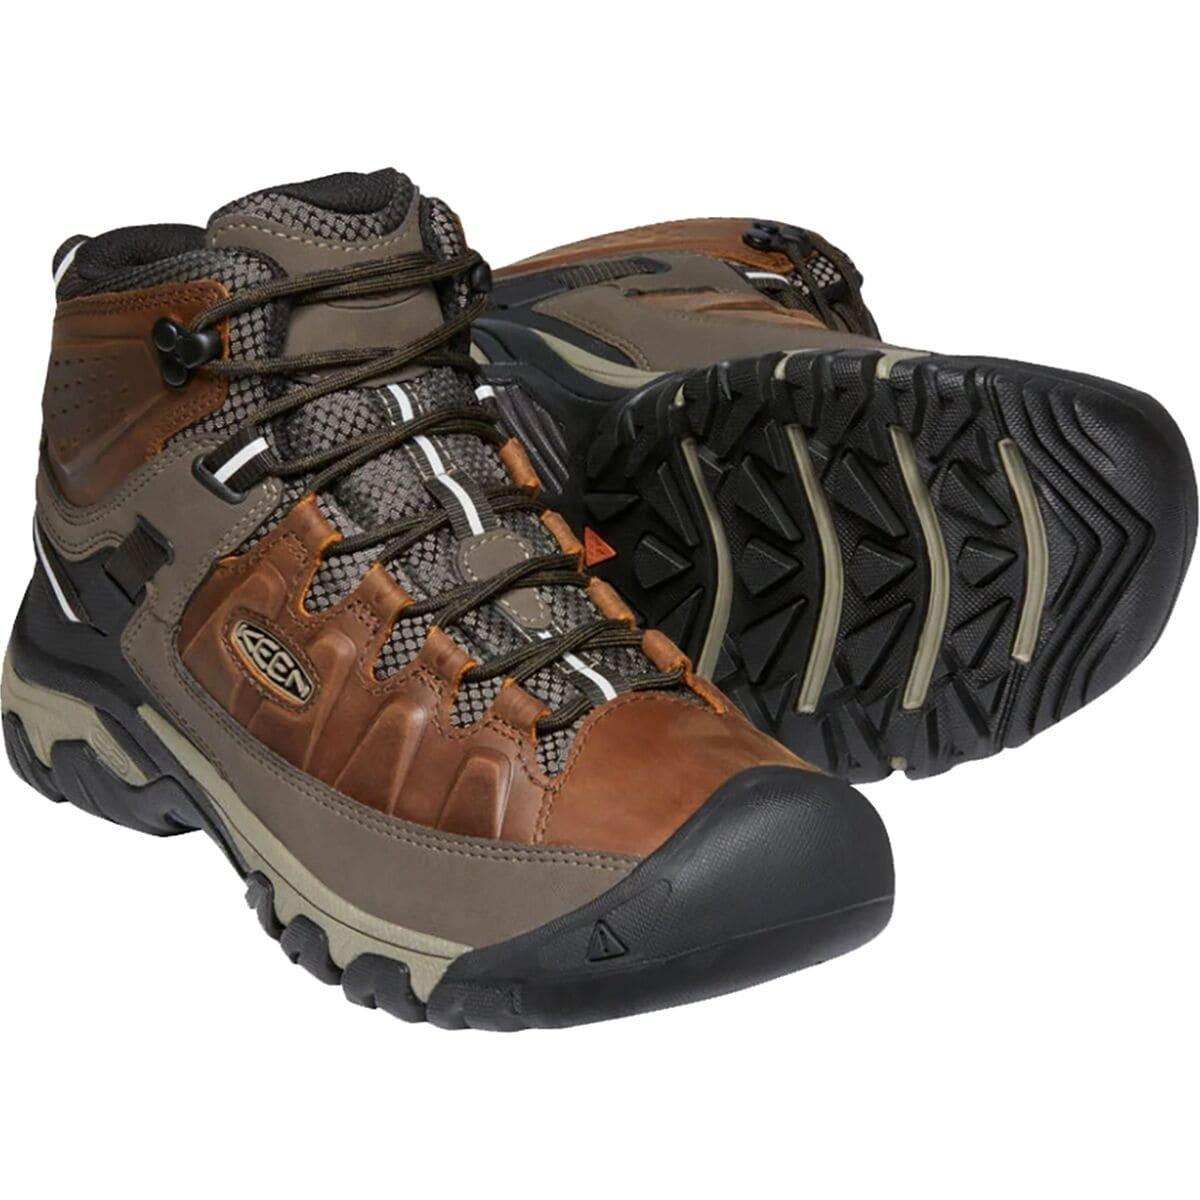 Keen Targhee III Mid Leather Waterproof Hiking Boot - Men's